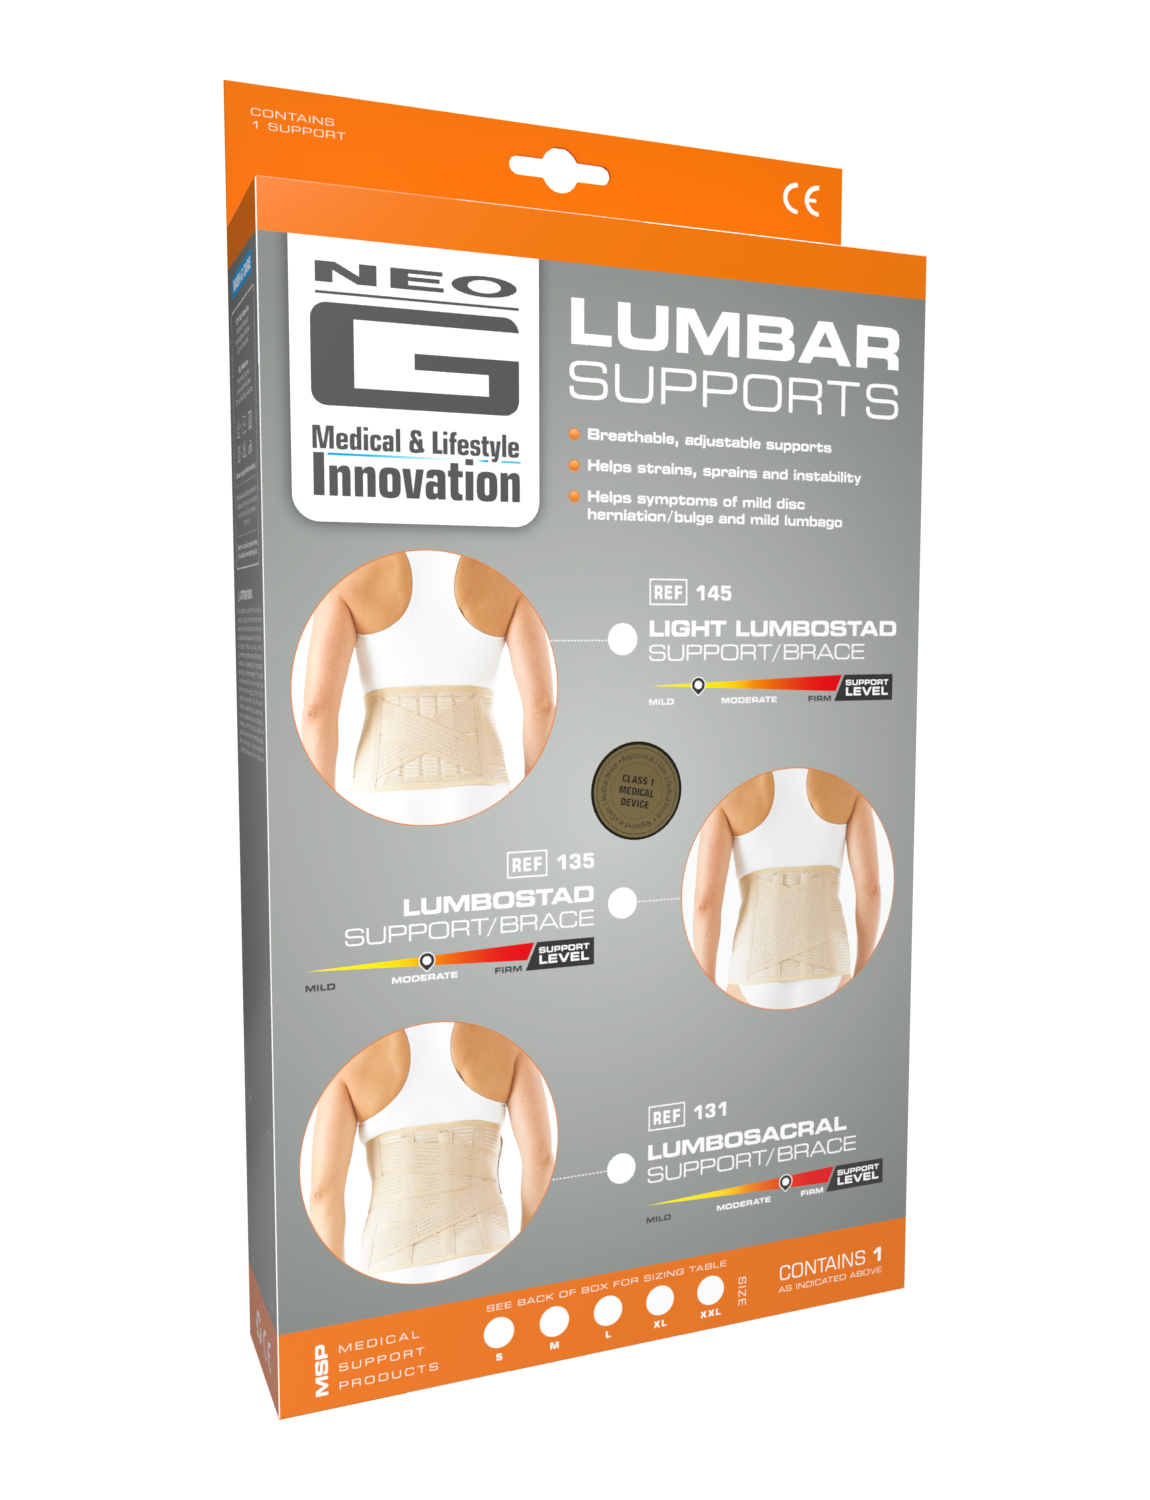 Lumbosacral Support/Brace